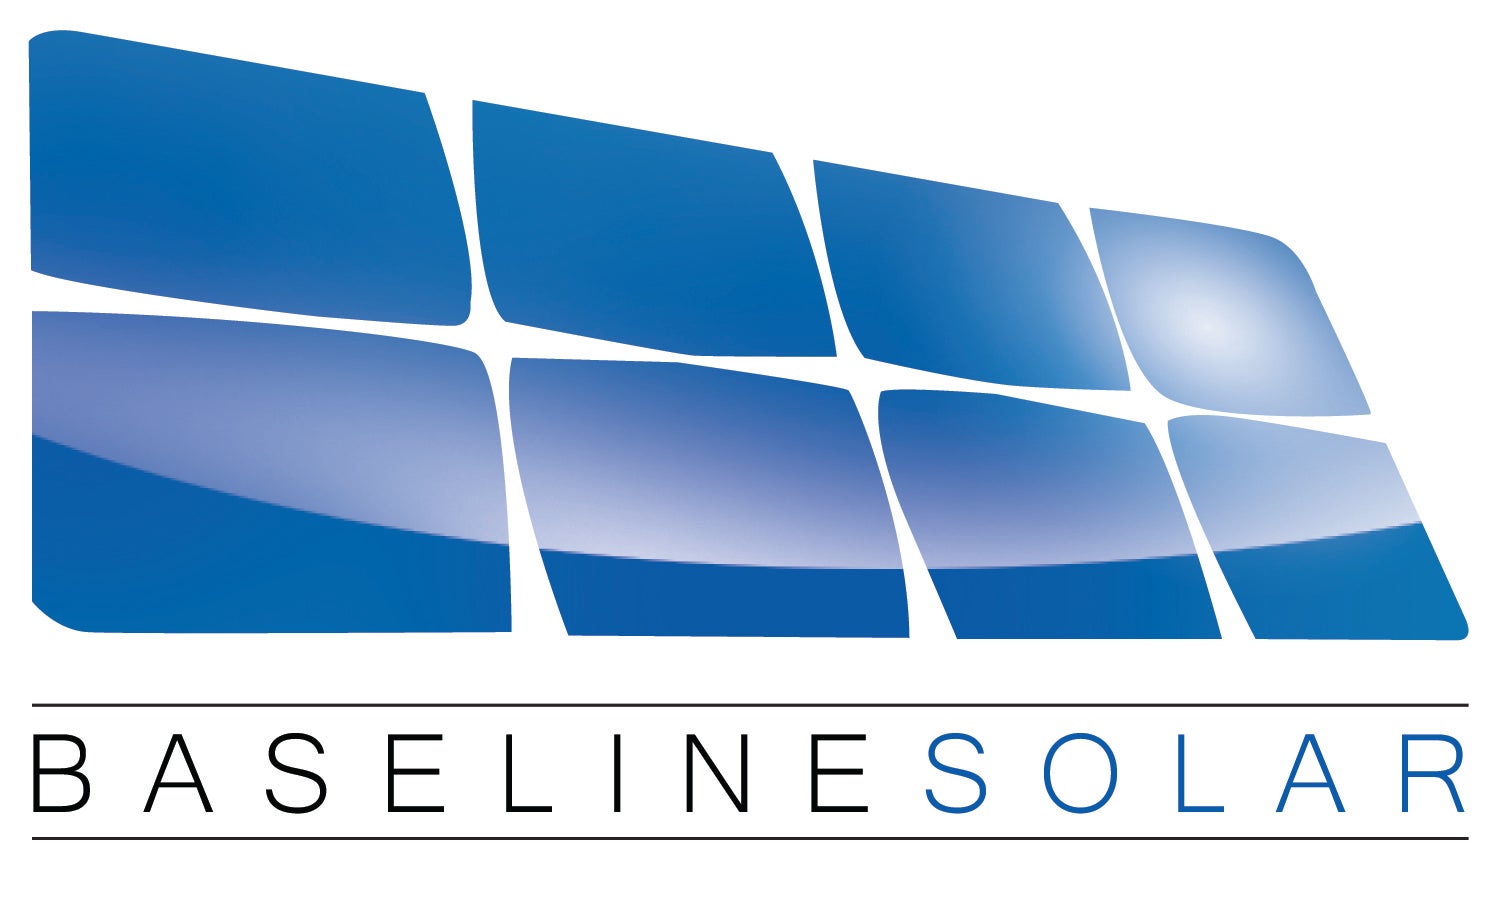 Baseline Solar Solutions logo